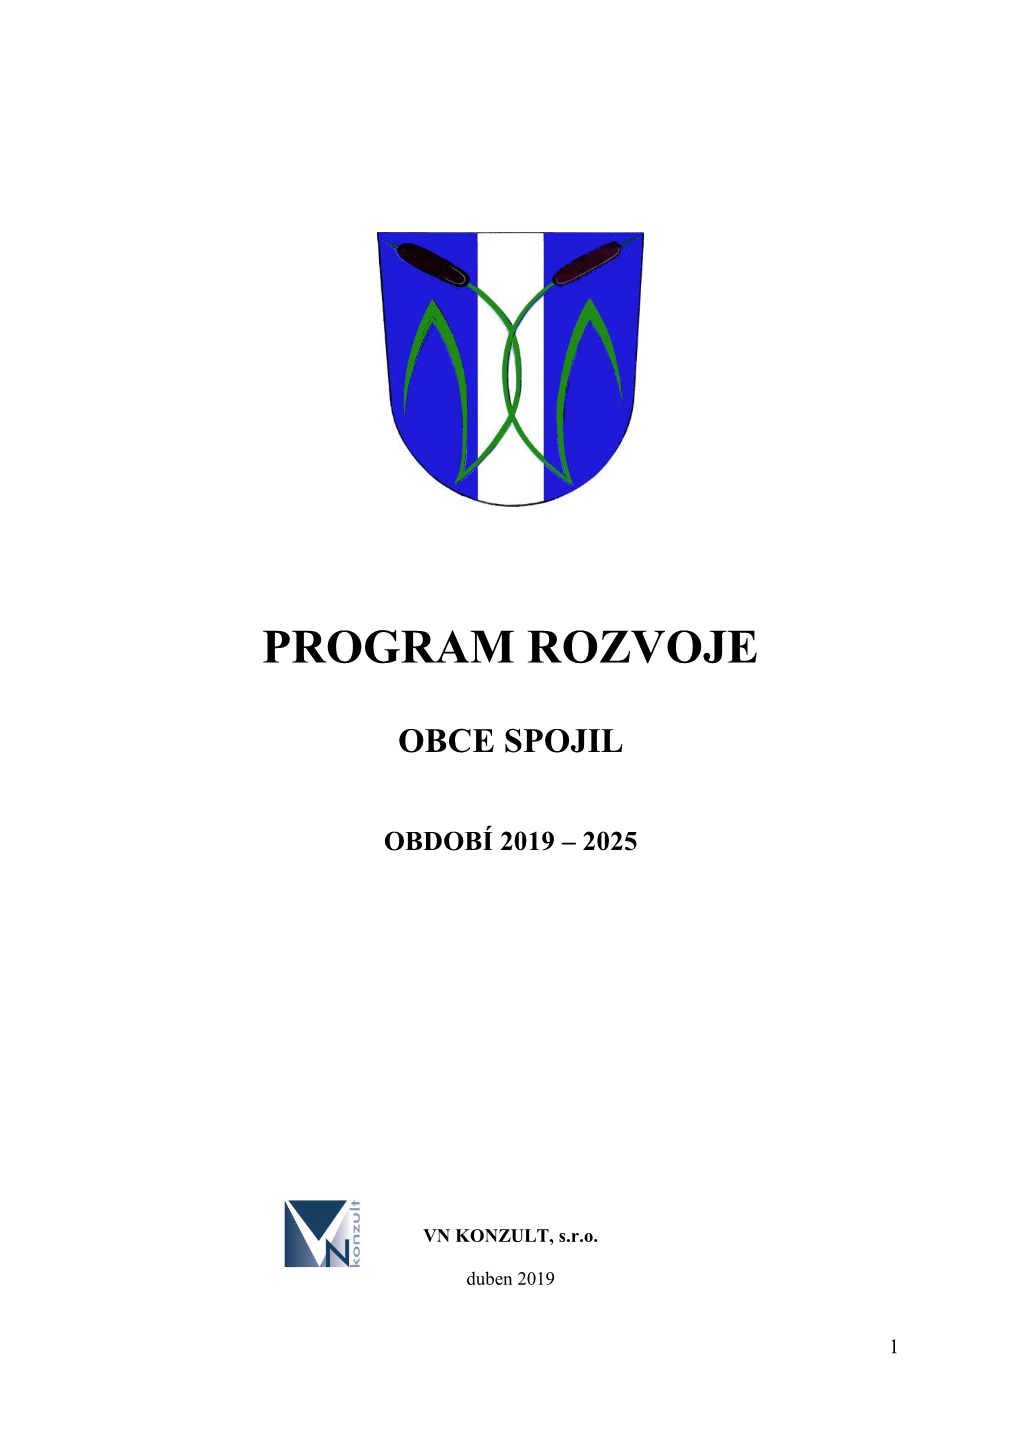 Program Rozvoje Obce Spojil (2015-2025)